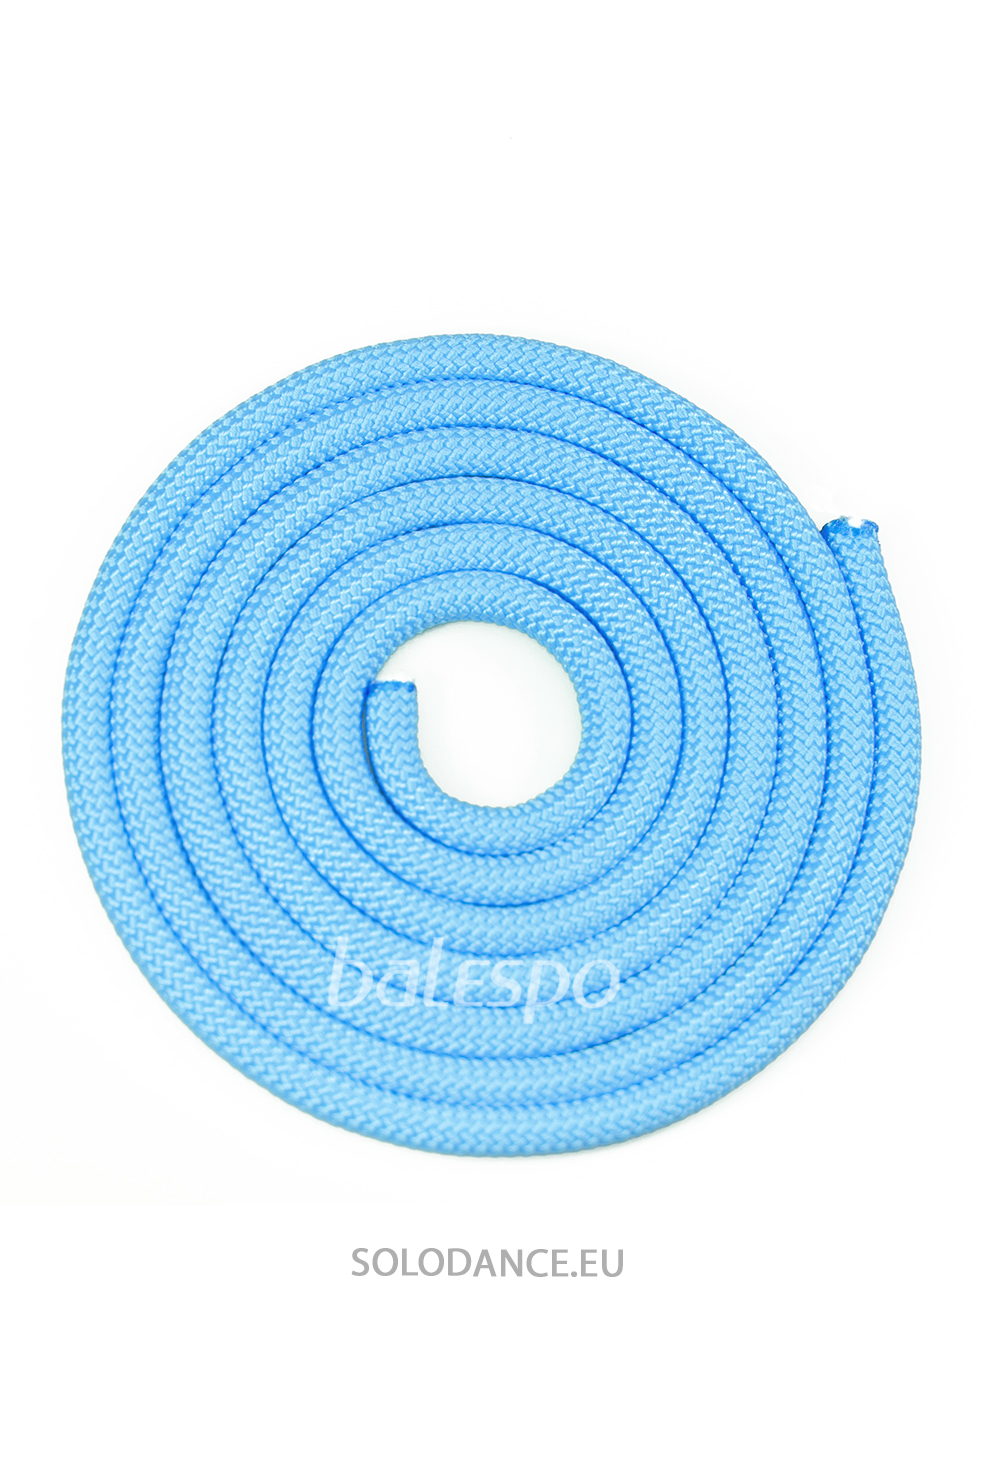 Gymnastic rope BALESPO light blue 3 m